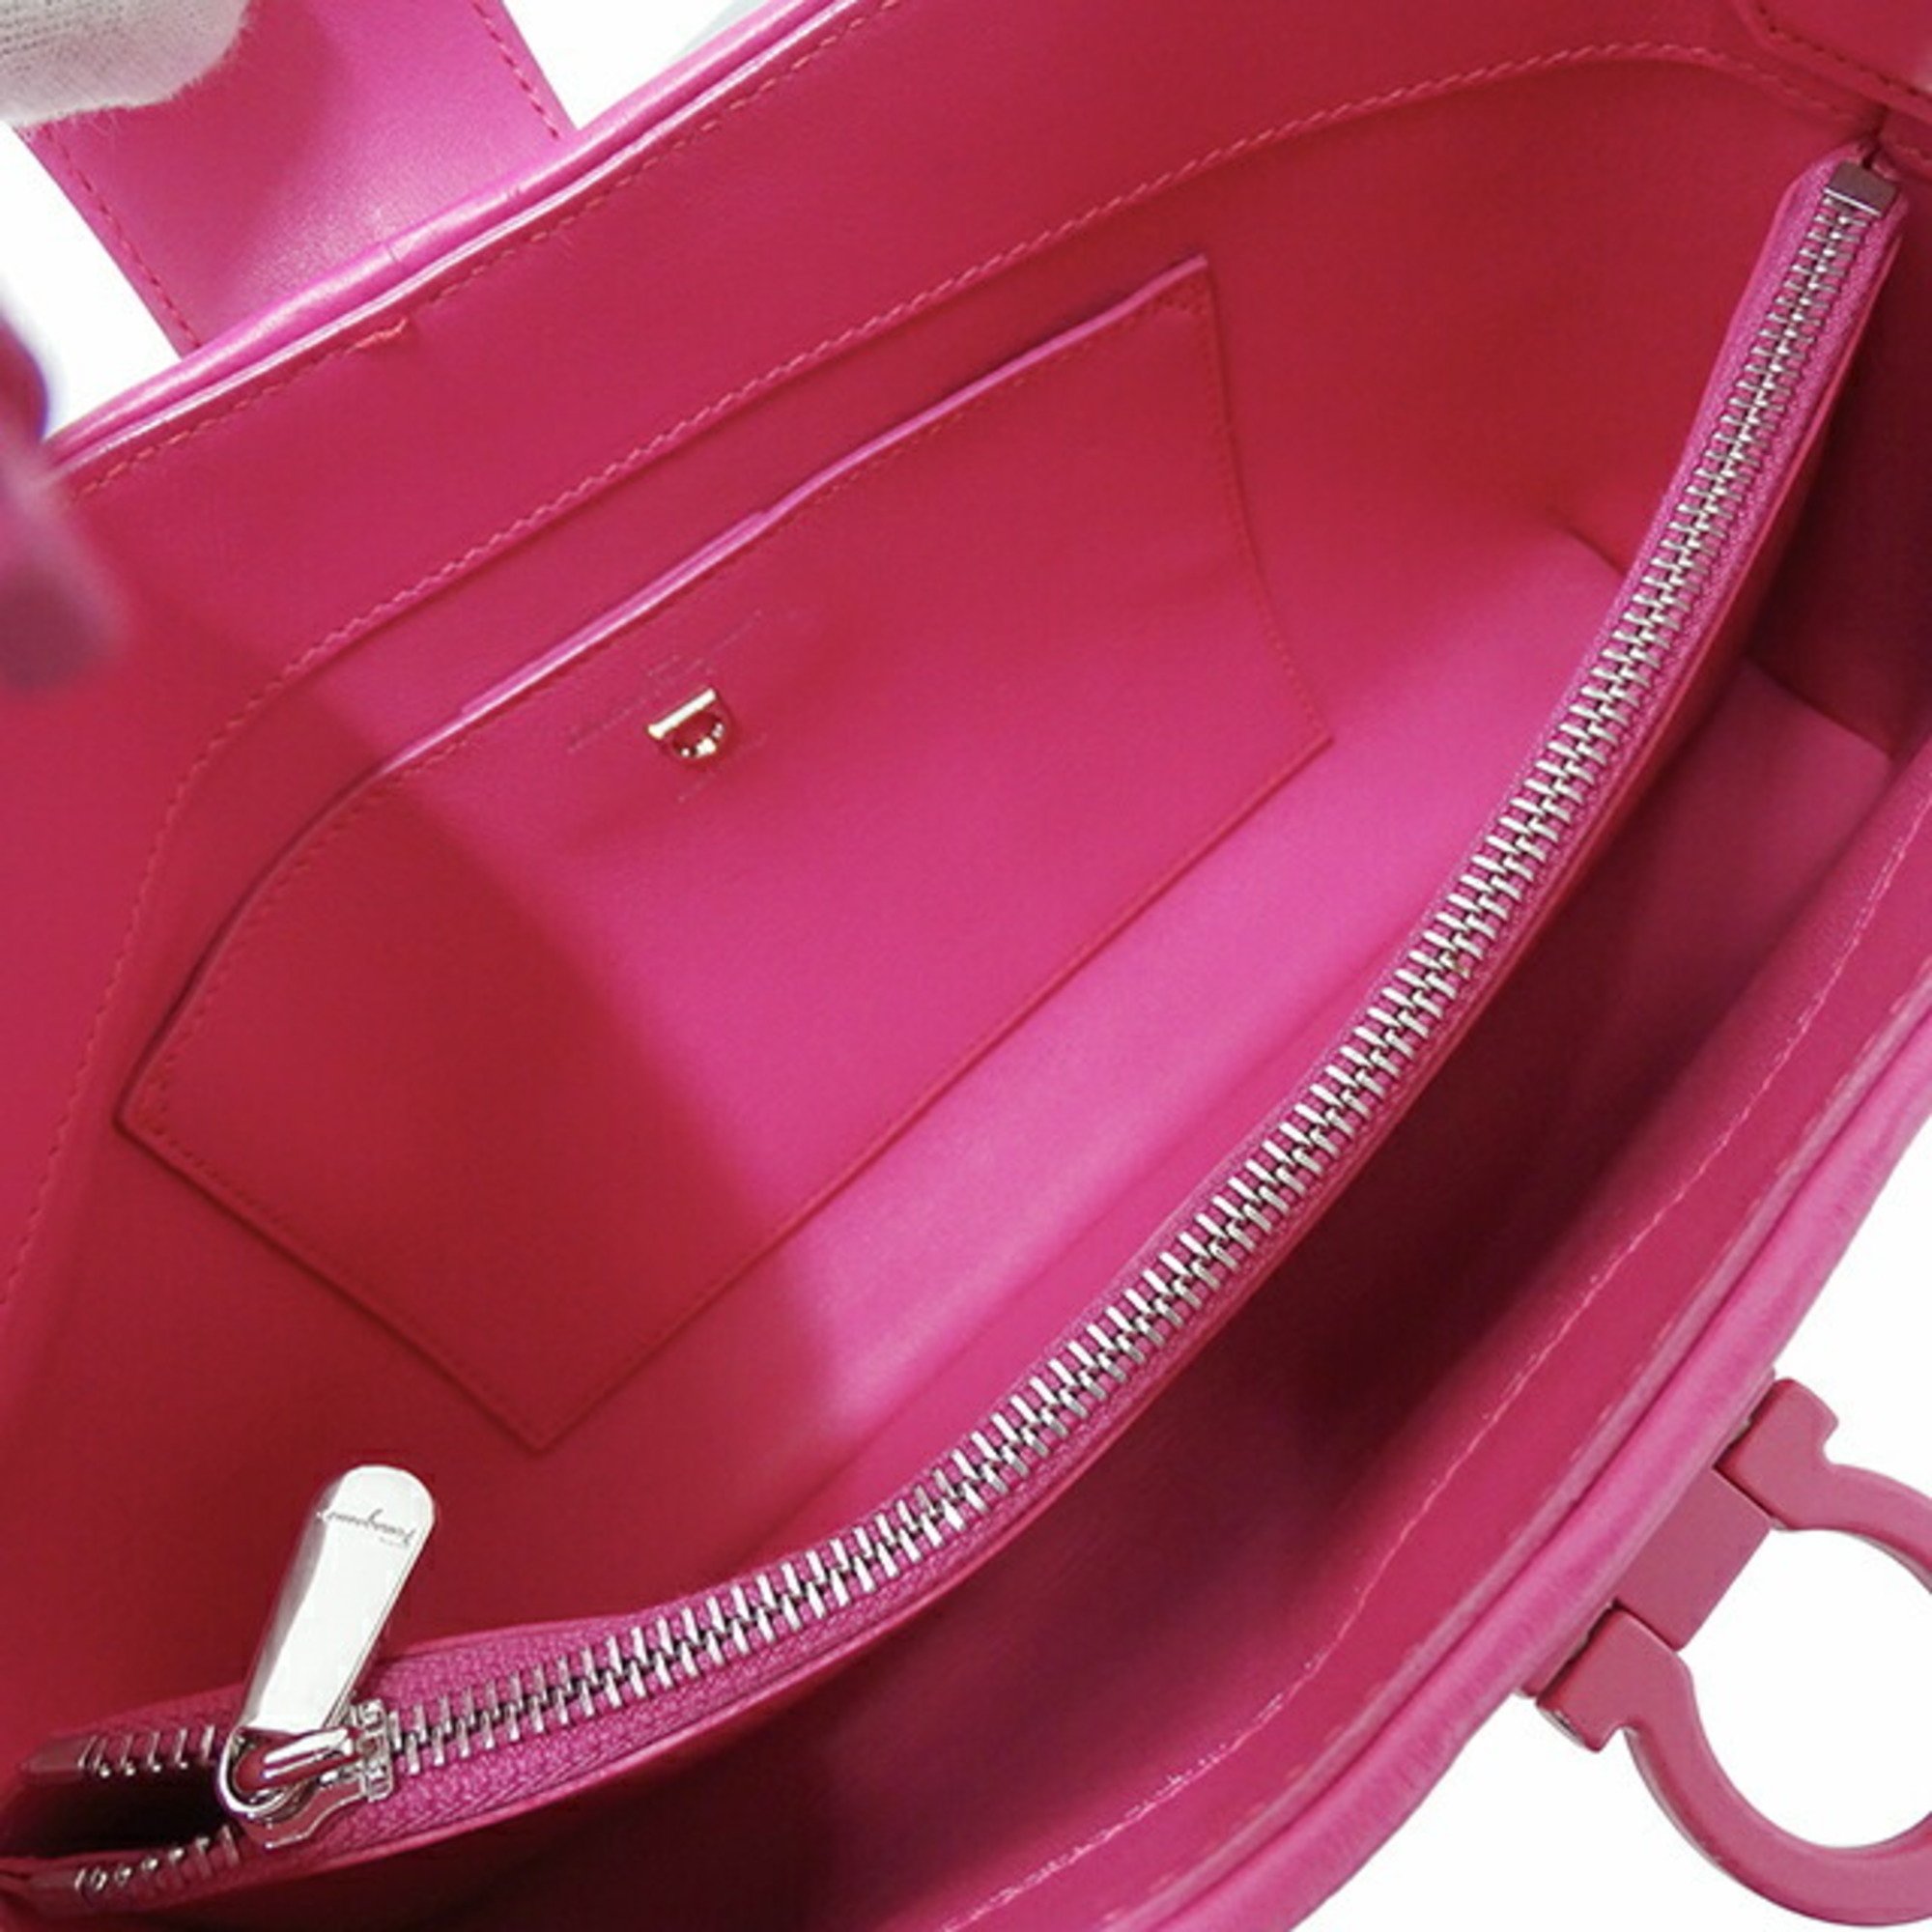 Salvatore Ferragamo Bag Women's Gancini Shoulder Leather Pink Bright